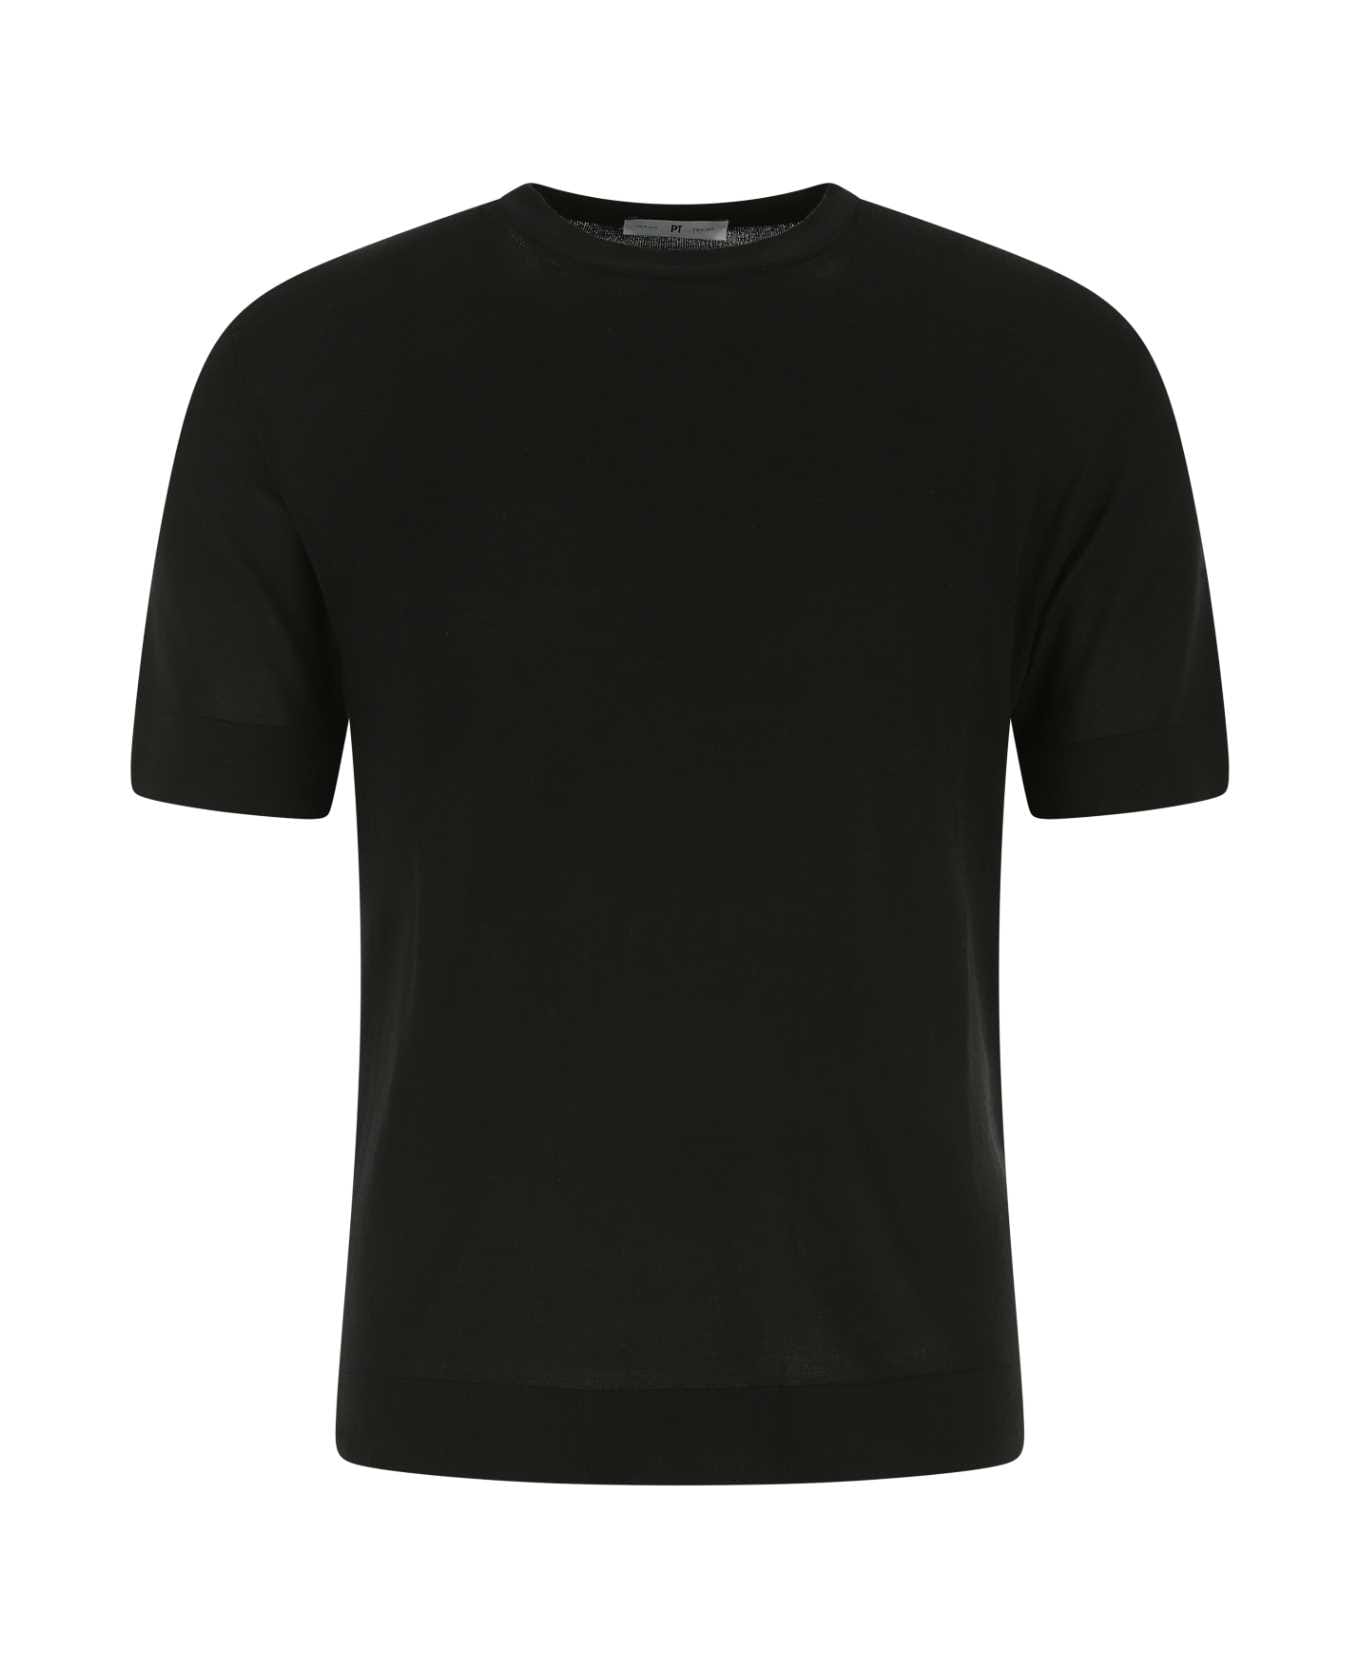 PT Torino Black Cotton Blend T-shirt - 0990 シャツ